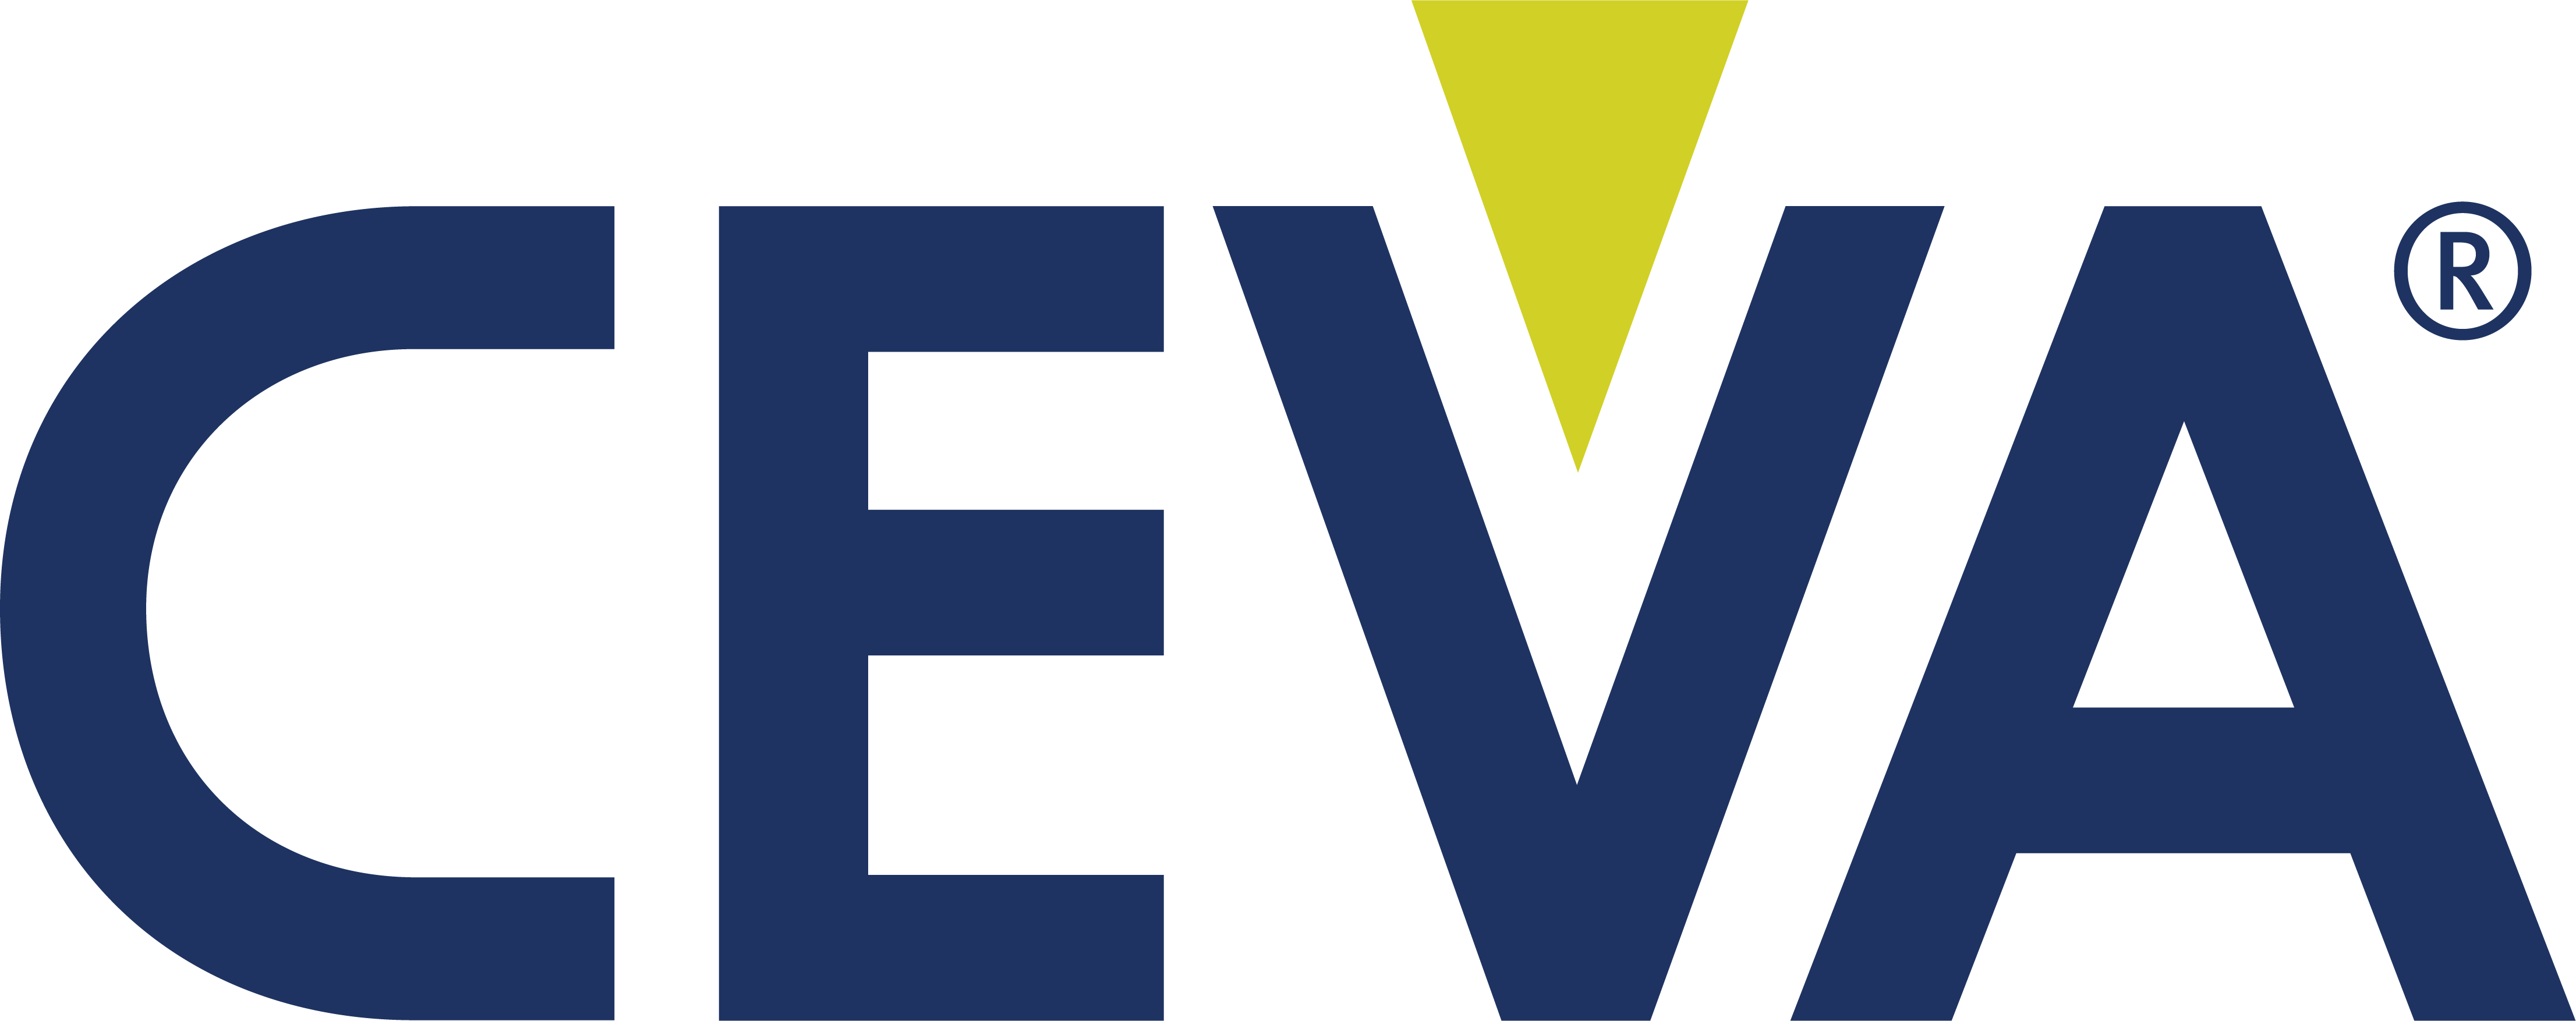 CEVA Technologies, Inc.